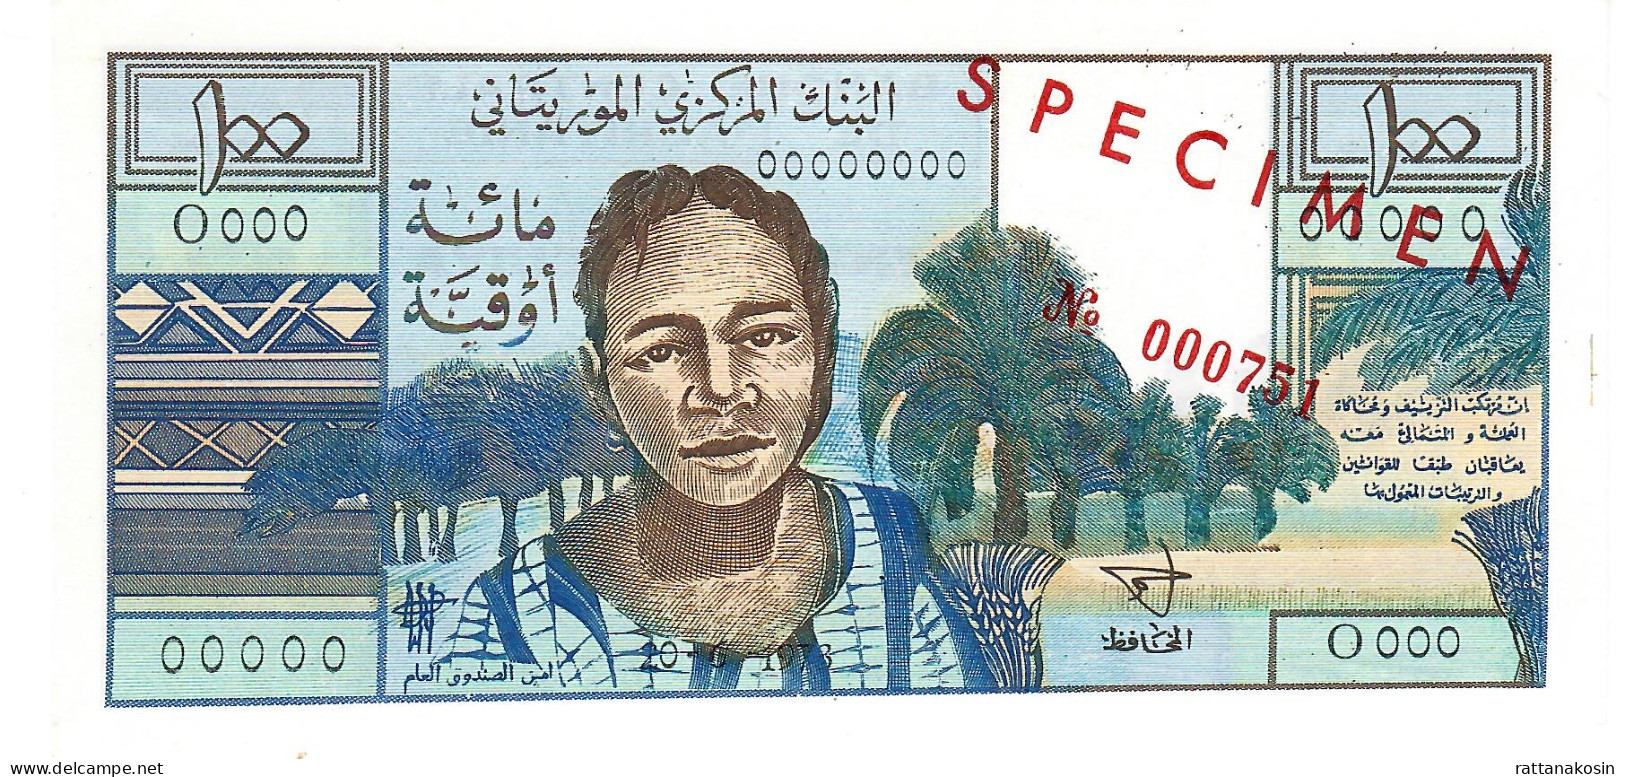 MAURITANIA P1s 100 OUGUIYA 20.6.1973 SPECIMEN   #000751   UNC. - Mauritanie